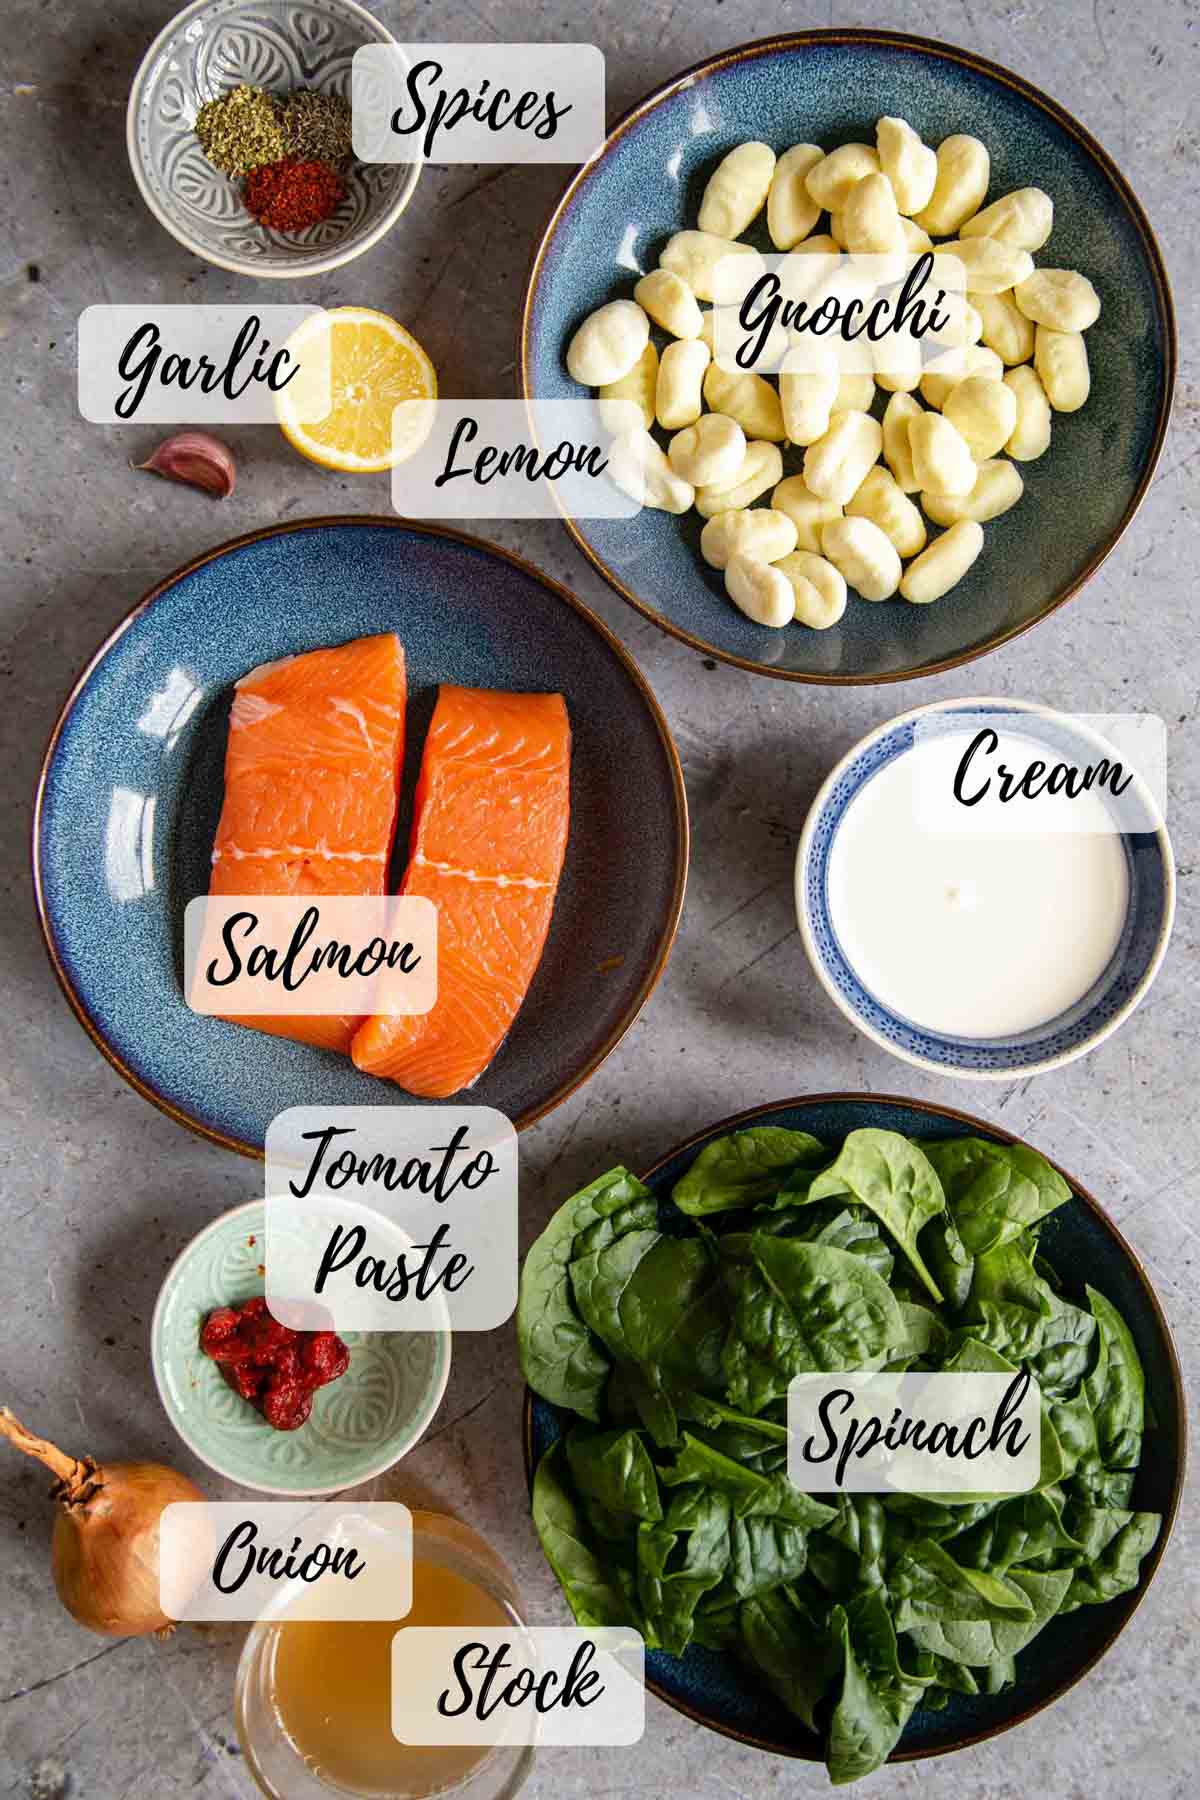 Ingredients for creamy salmon gnocchi: gnocchi, cream, spinach, onion, oil, salmon, lemon, garlic, herbs and spices